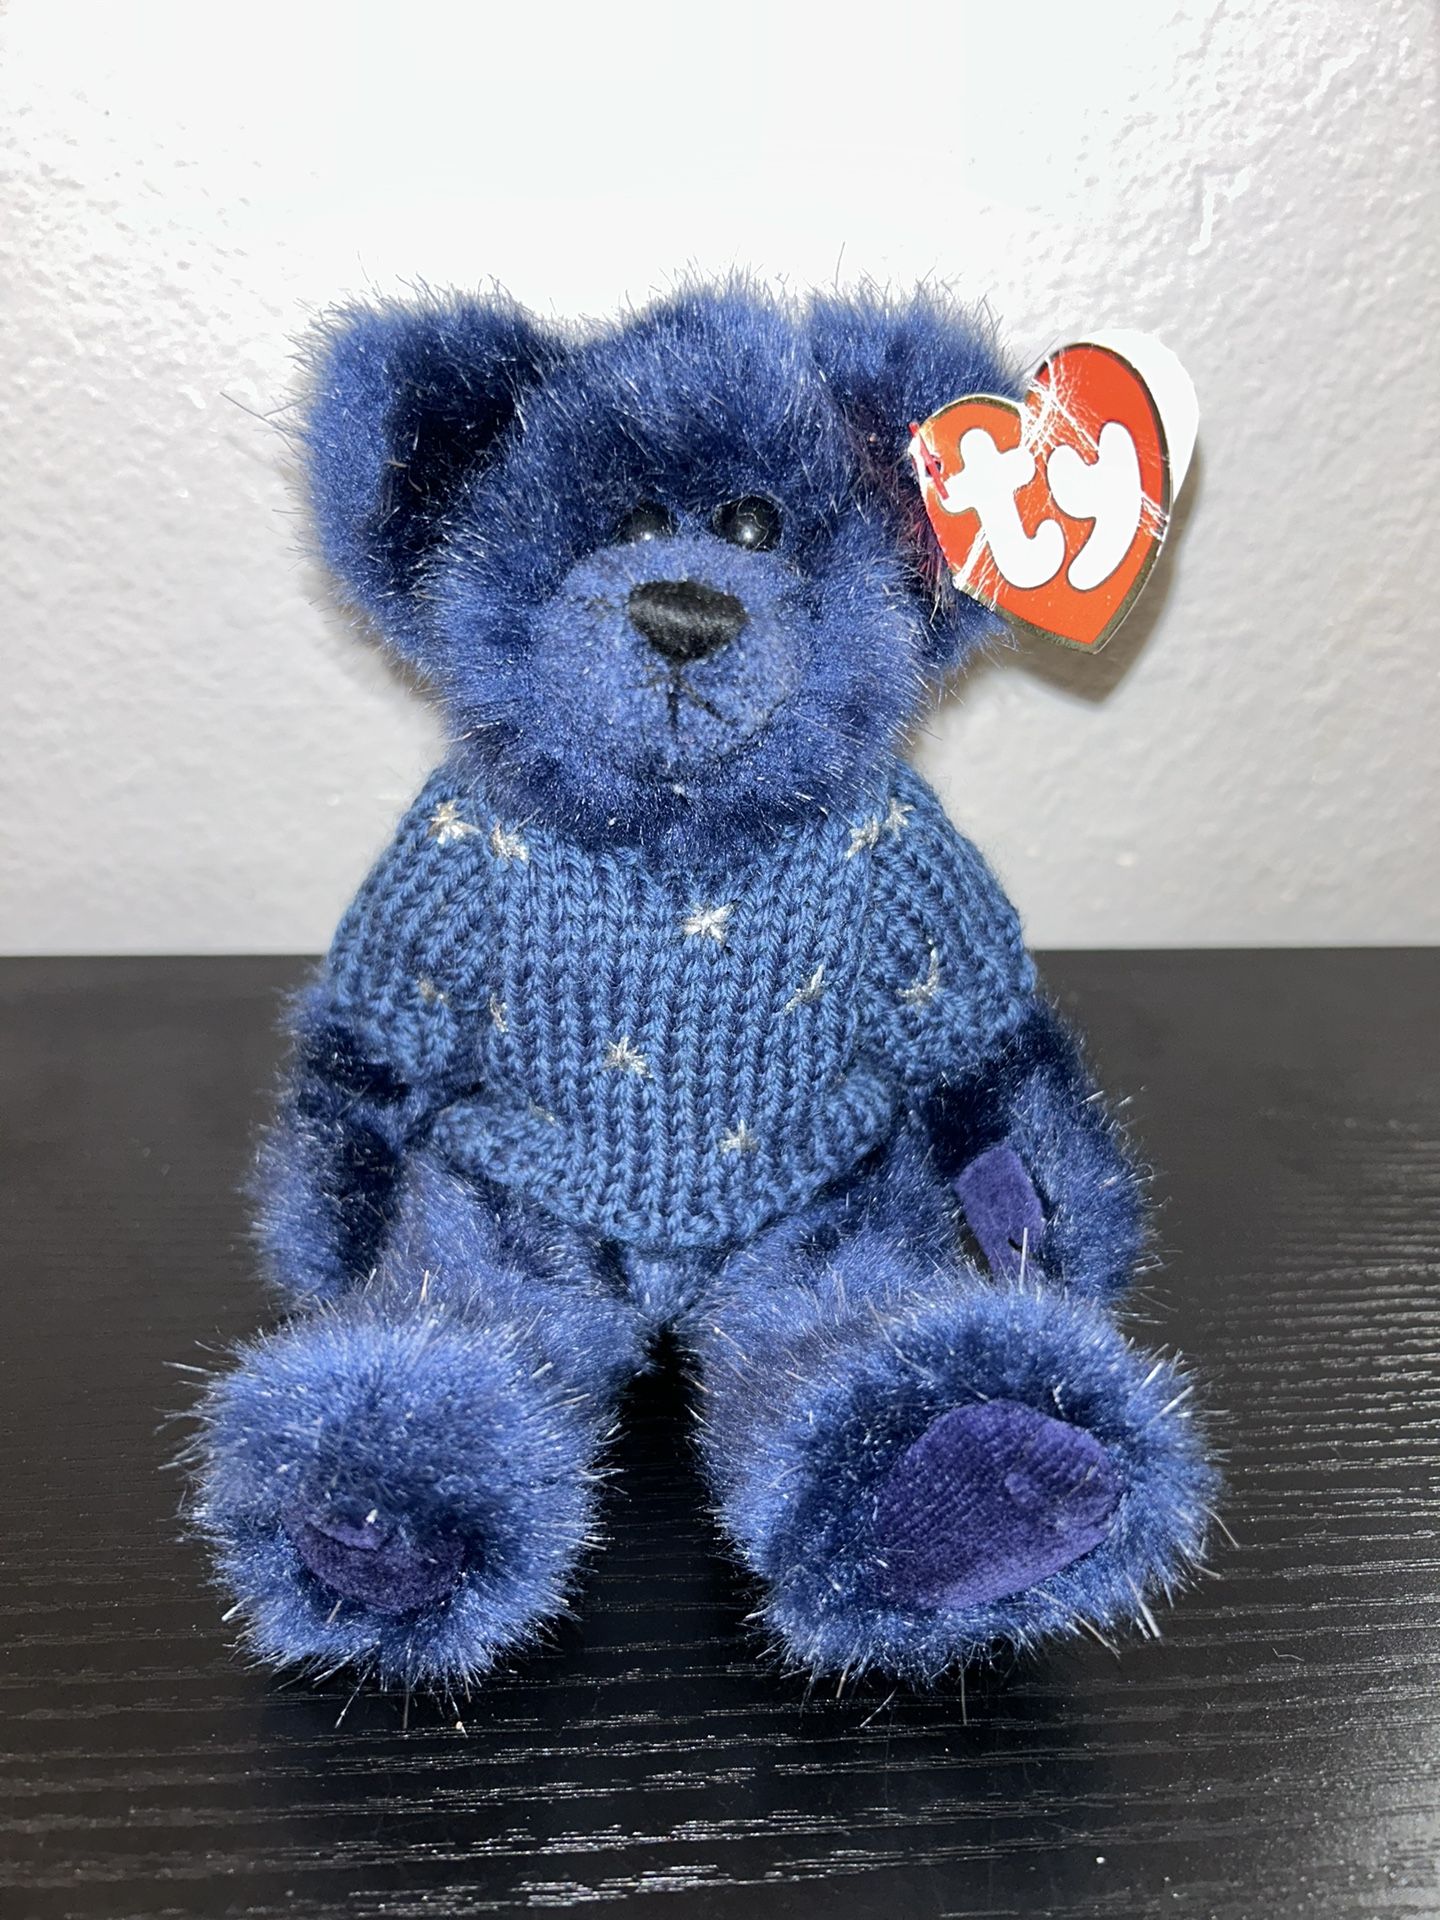 TY Beanie Baby 1993 Retired Orion Posable Blue Bear ATTIC TREASURES Handmade